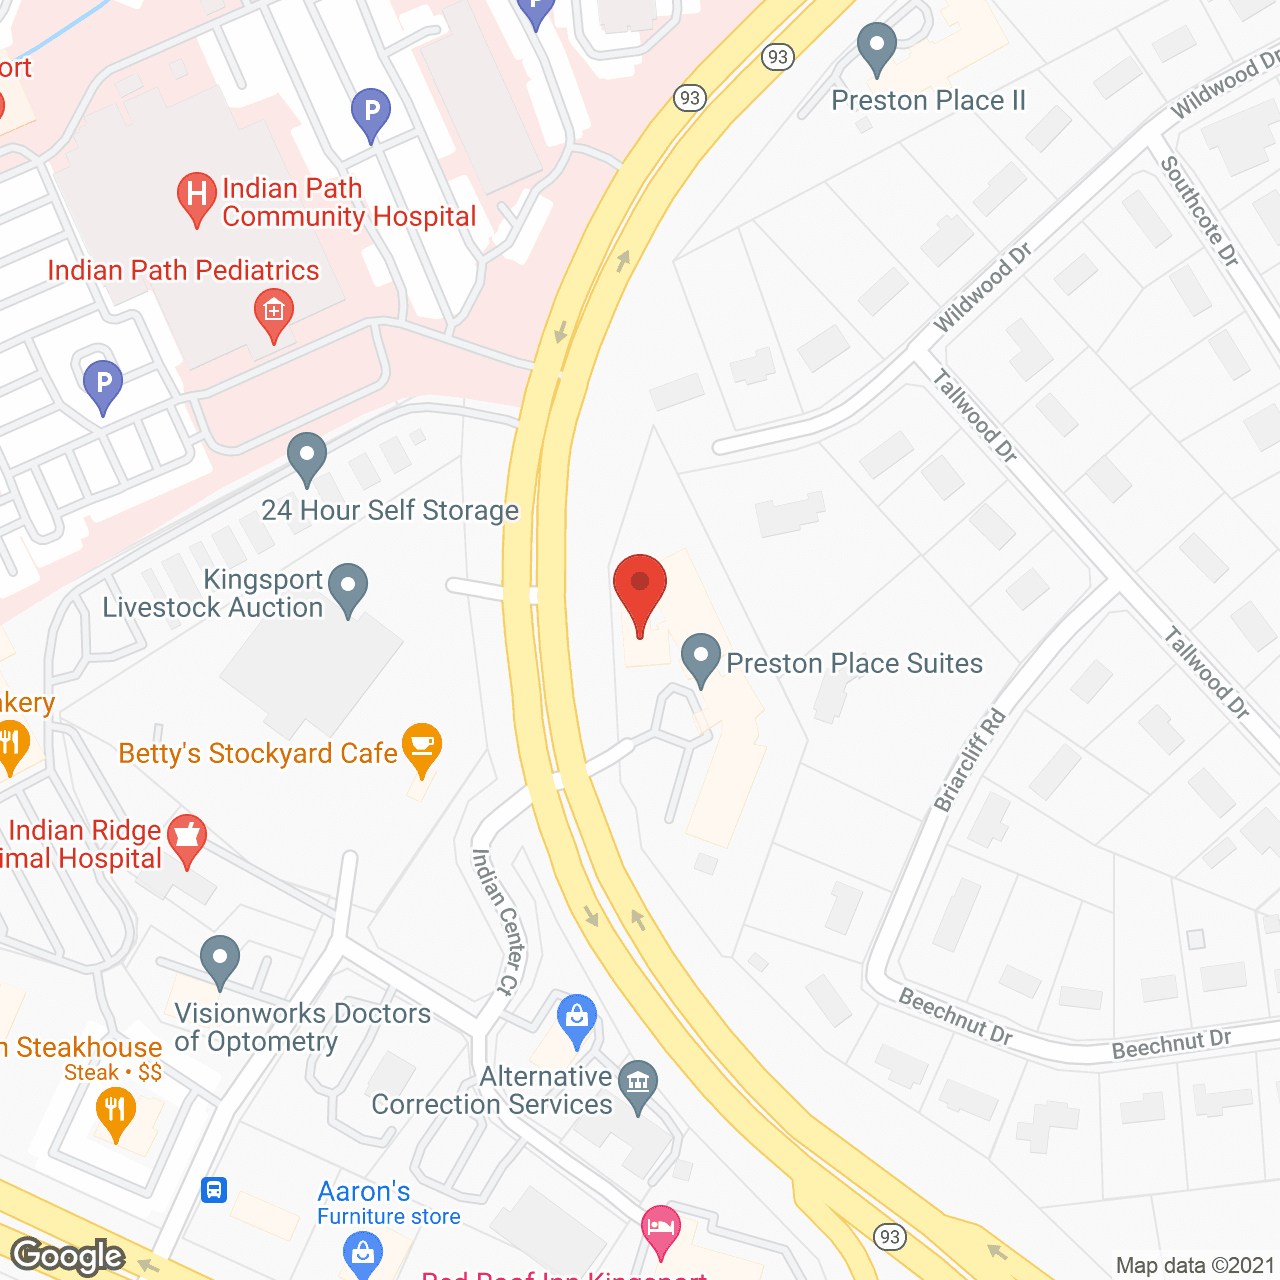 Preston Place Suites in google map